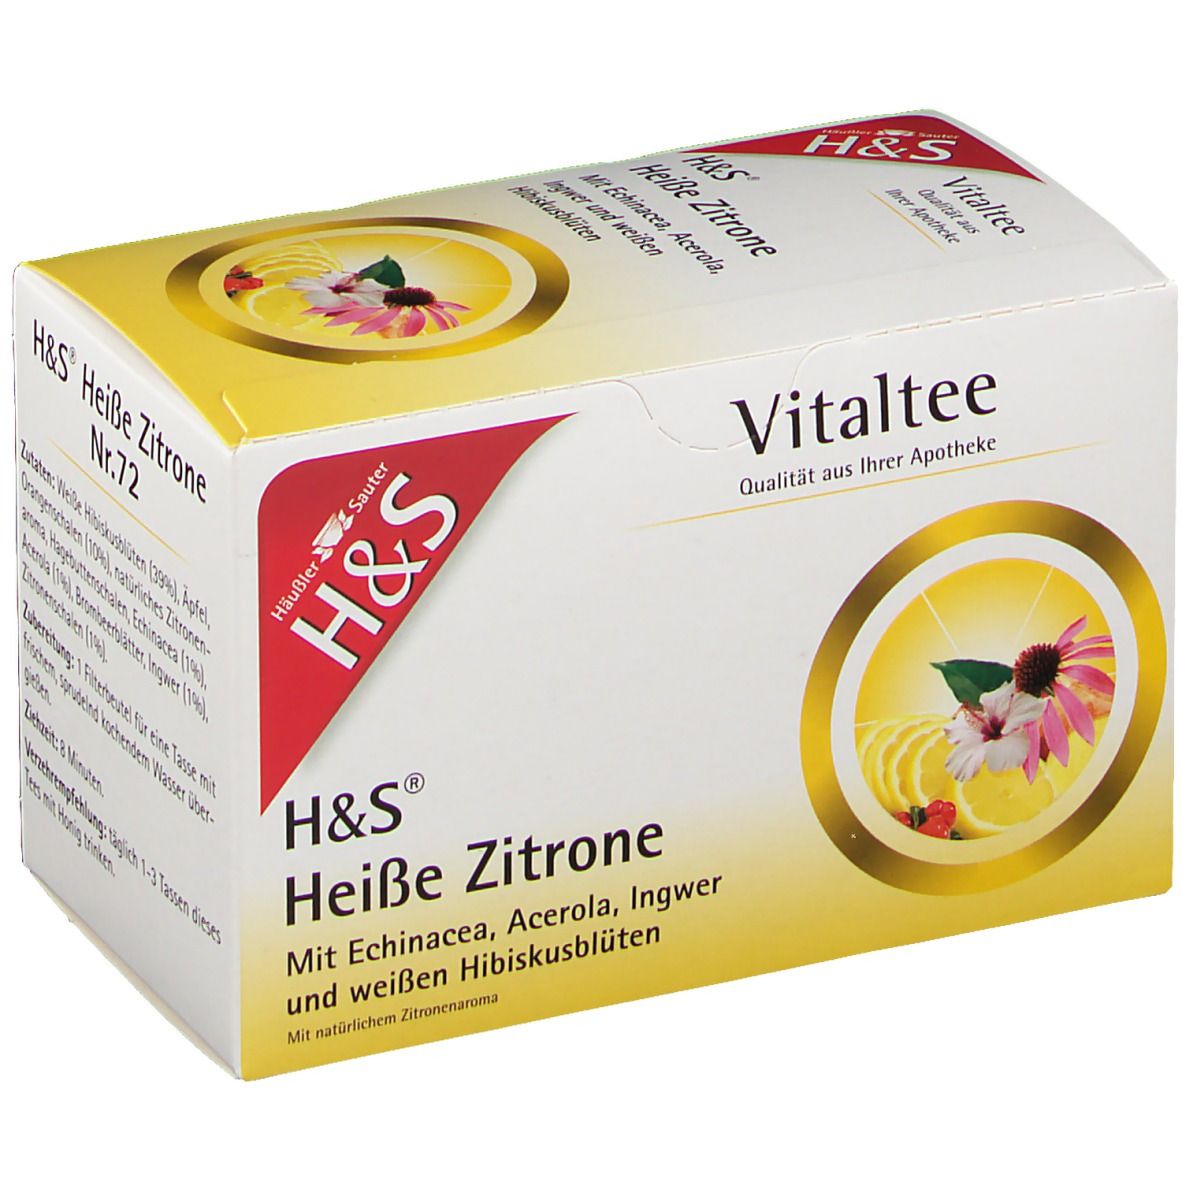 H&S Heiße Zitrone Vitaltee Nr. 72